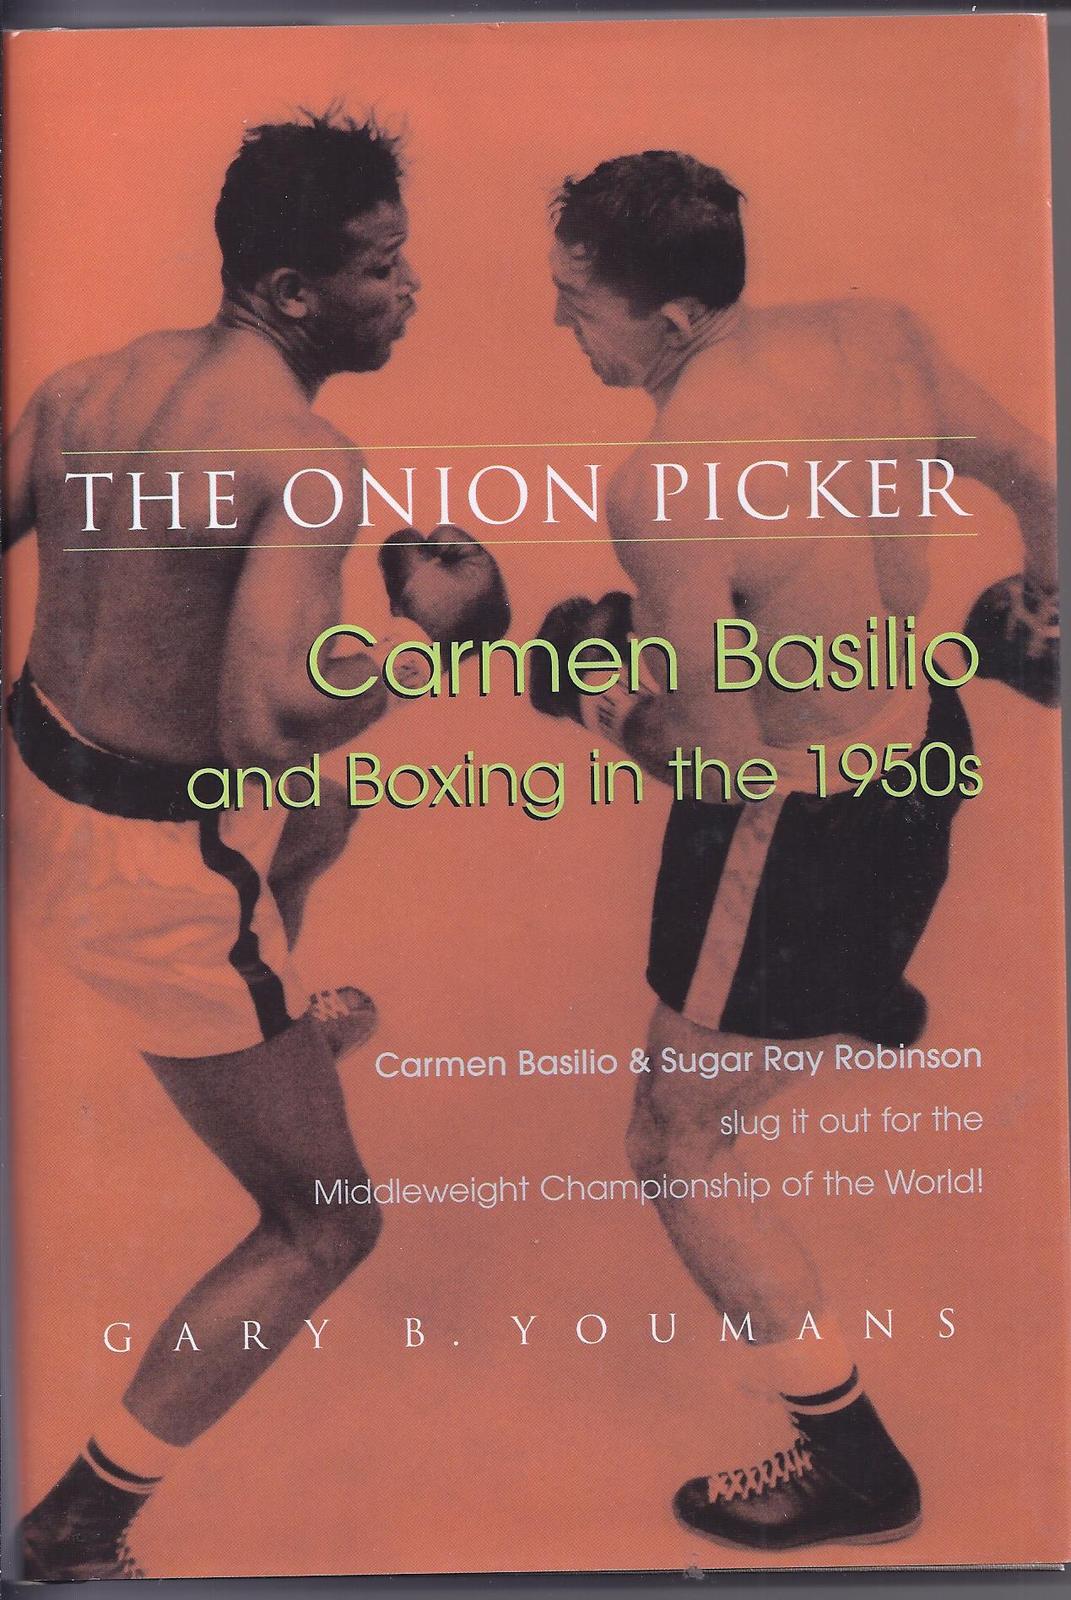 THE ONION PICKER - CARMEN BASILIO &Boxing in the 1950s -Gary B. Youmans - $17.95